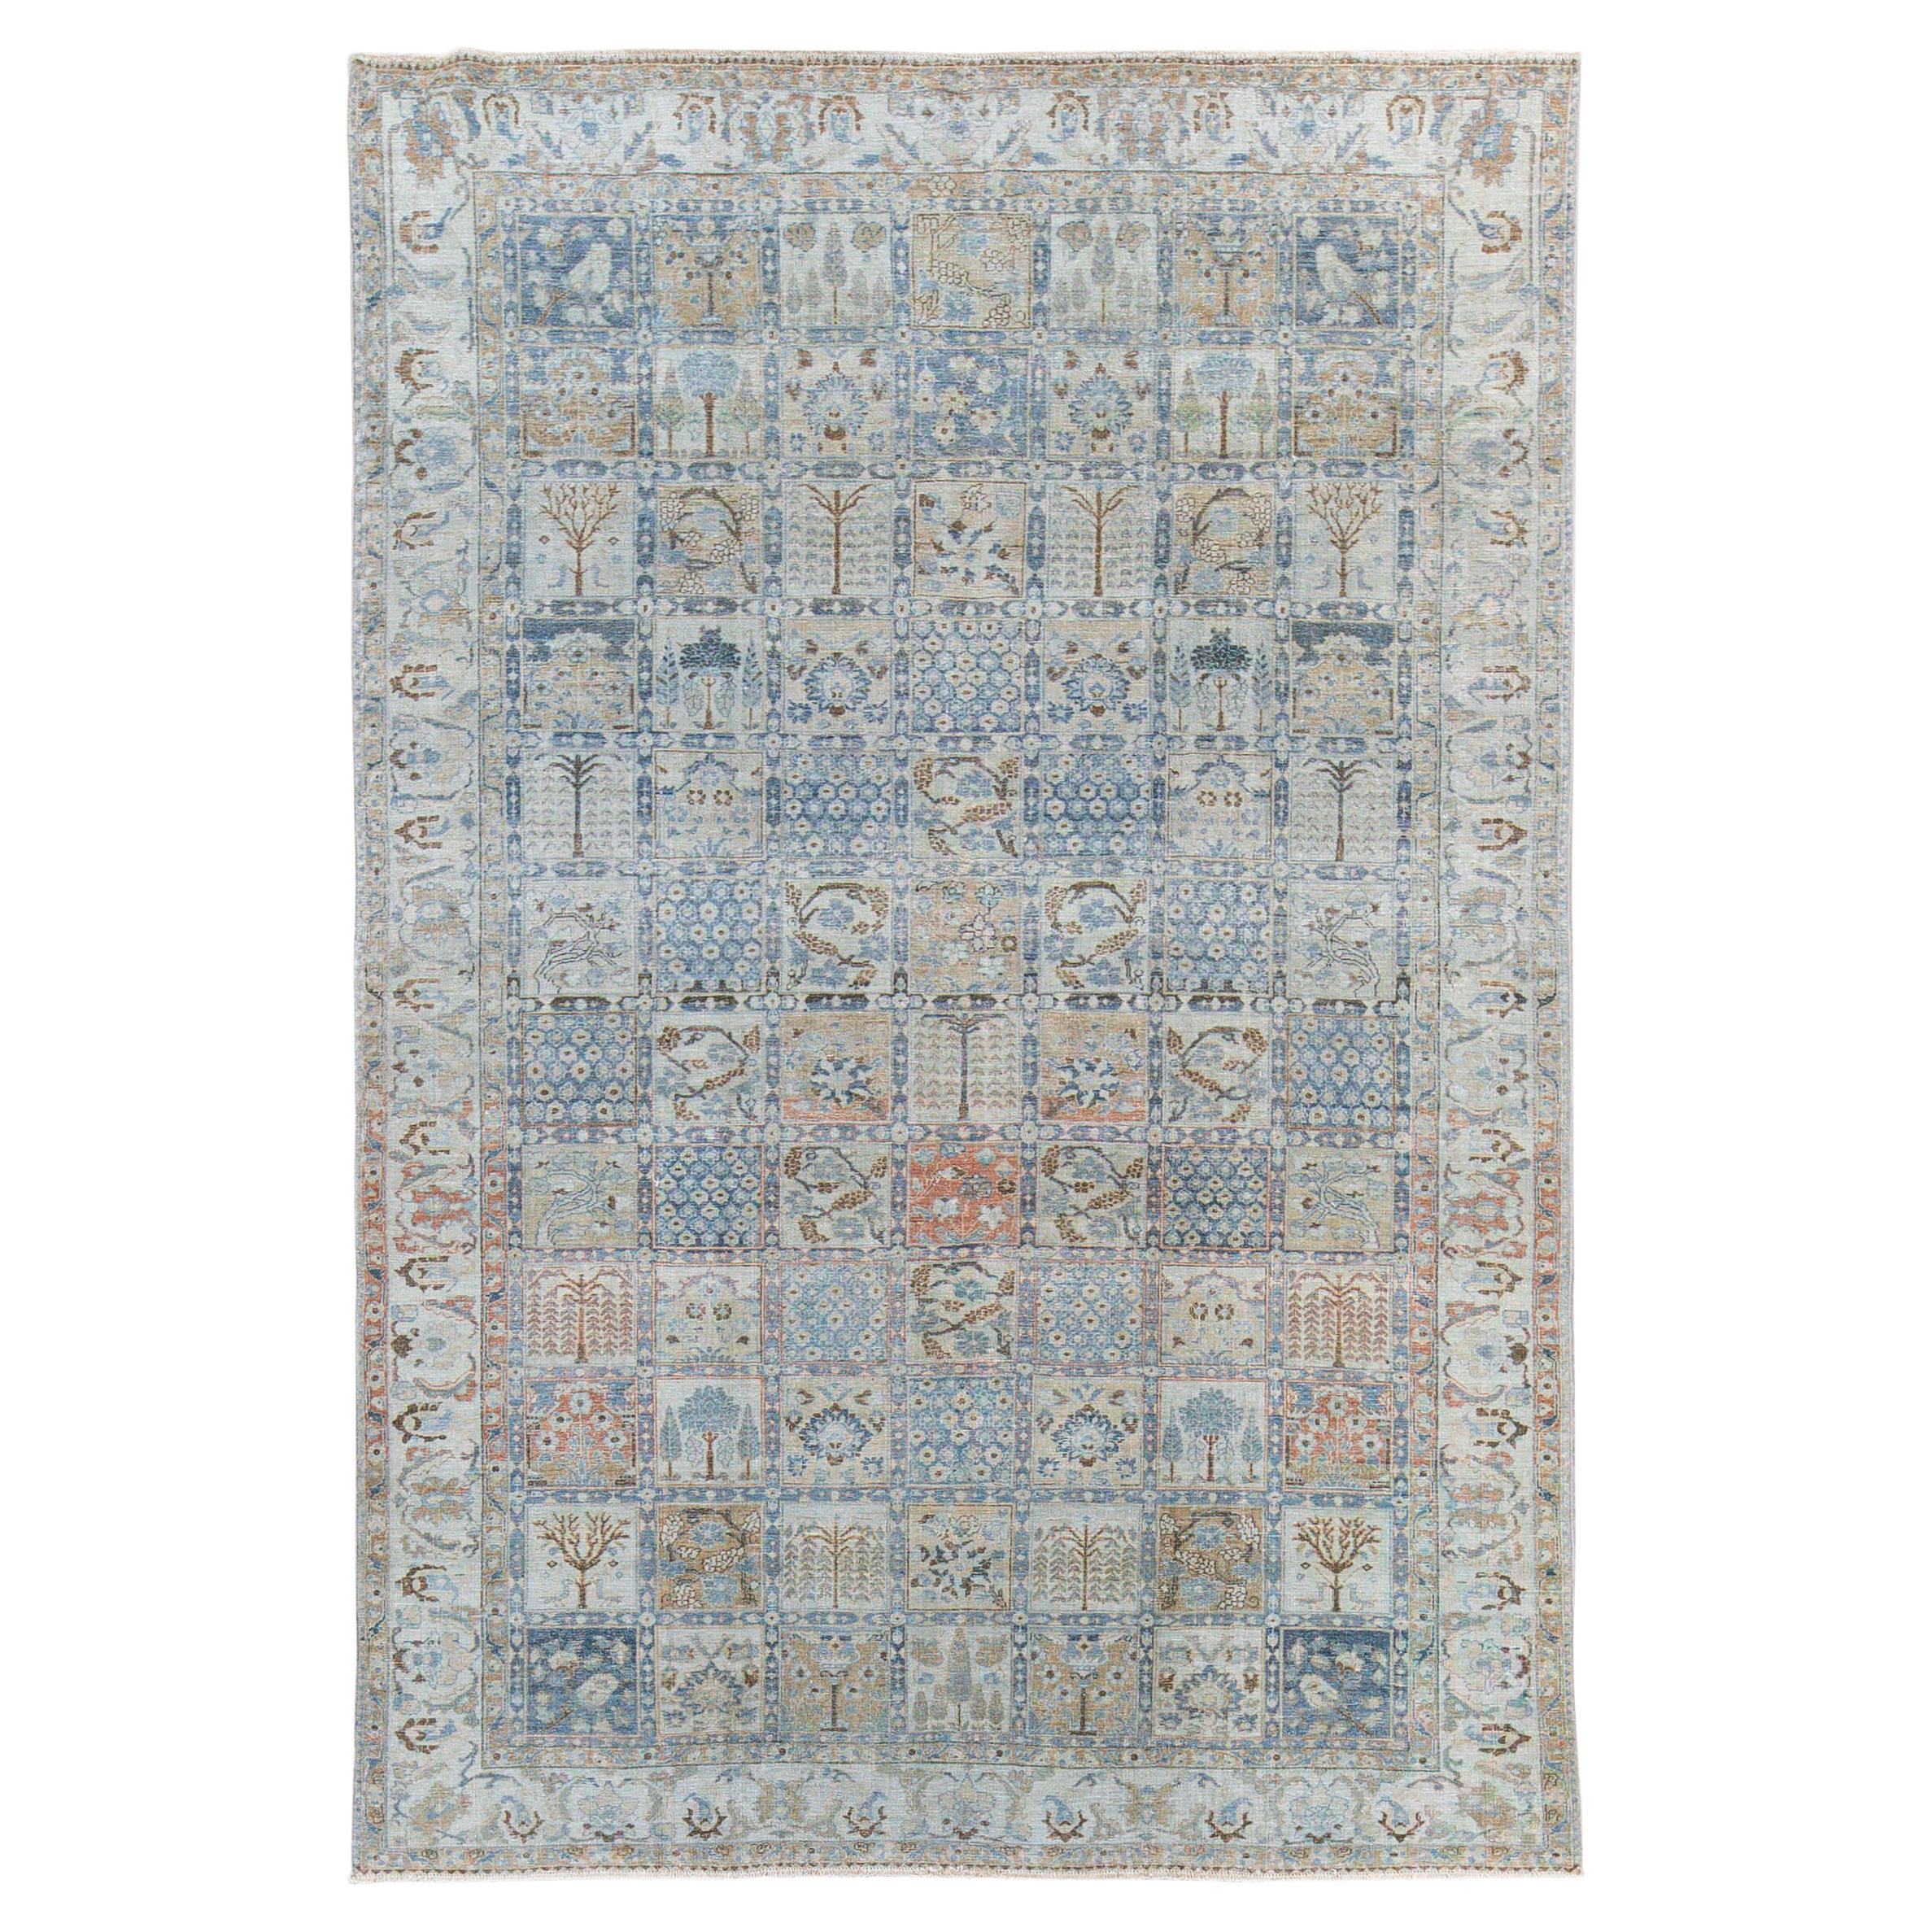 Antique Tabriz Handmade Blue Designed Geometric Pattern Wool Rug